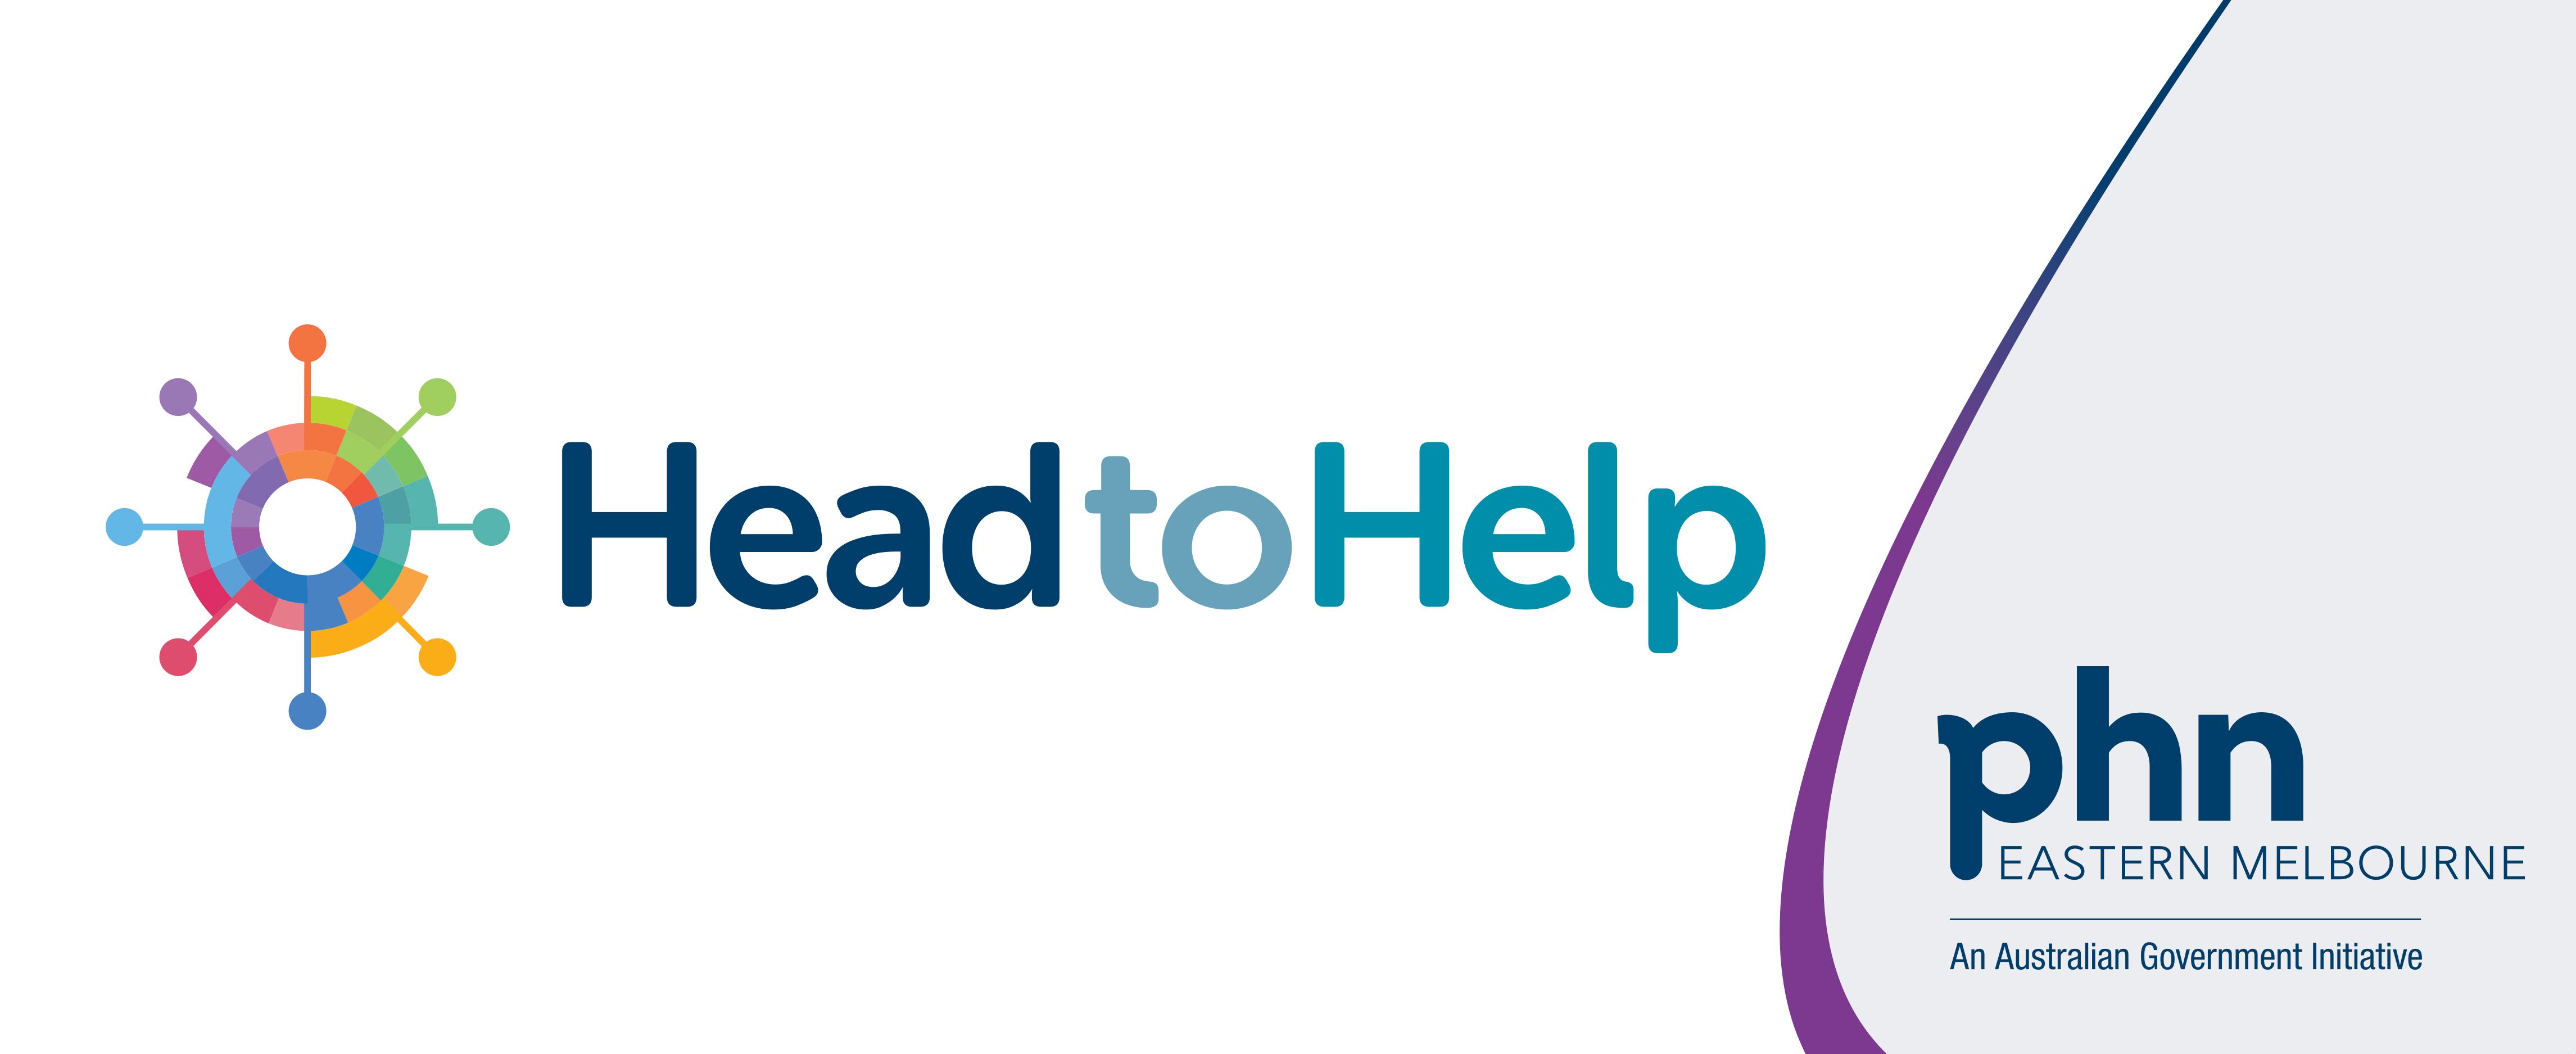 HeadtoHelp mental health hubs start Mon 14 Sep